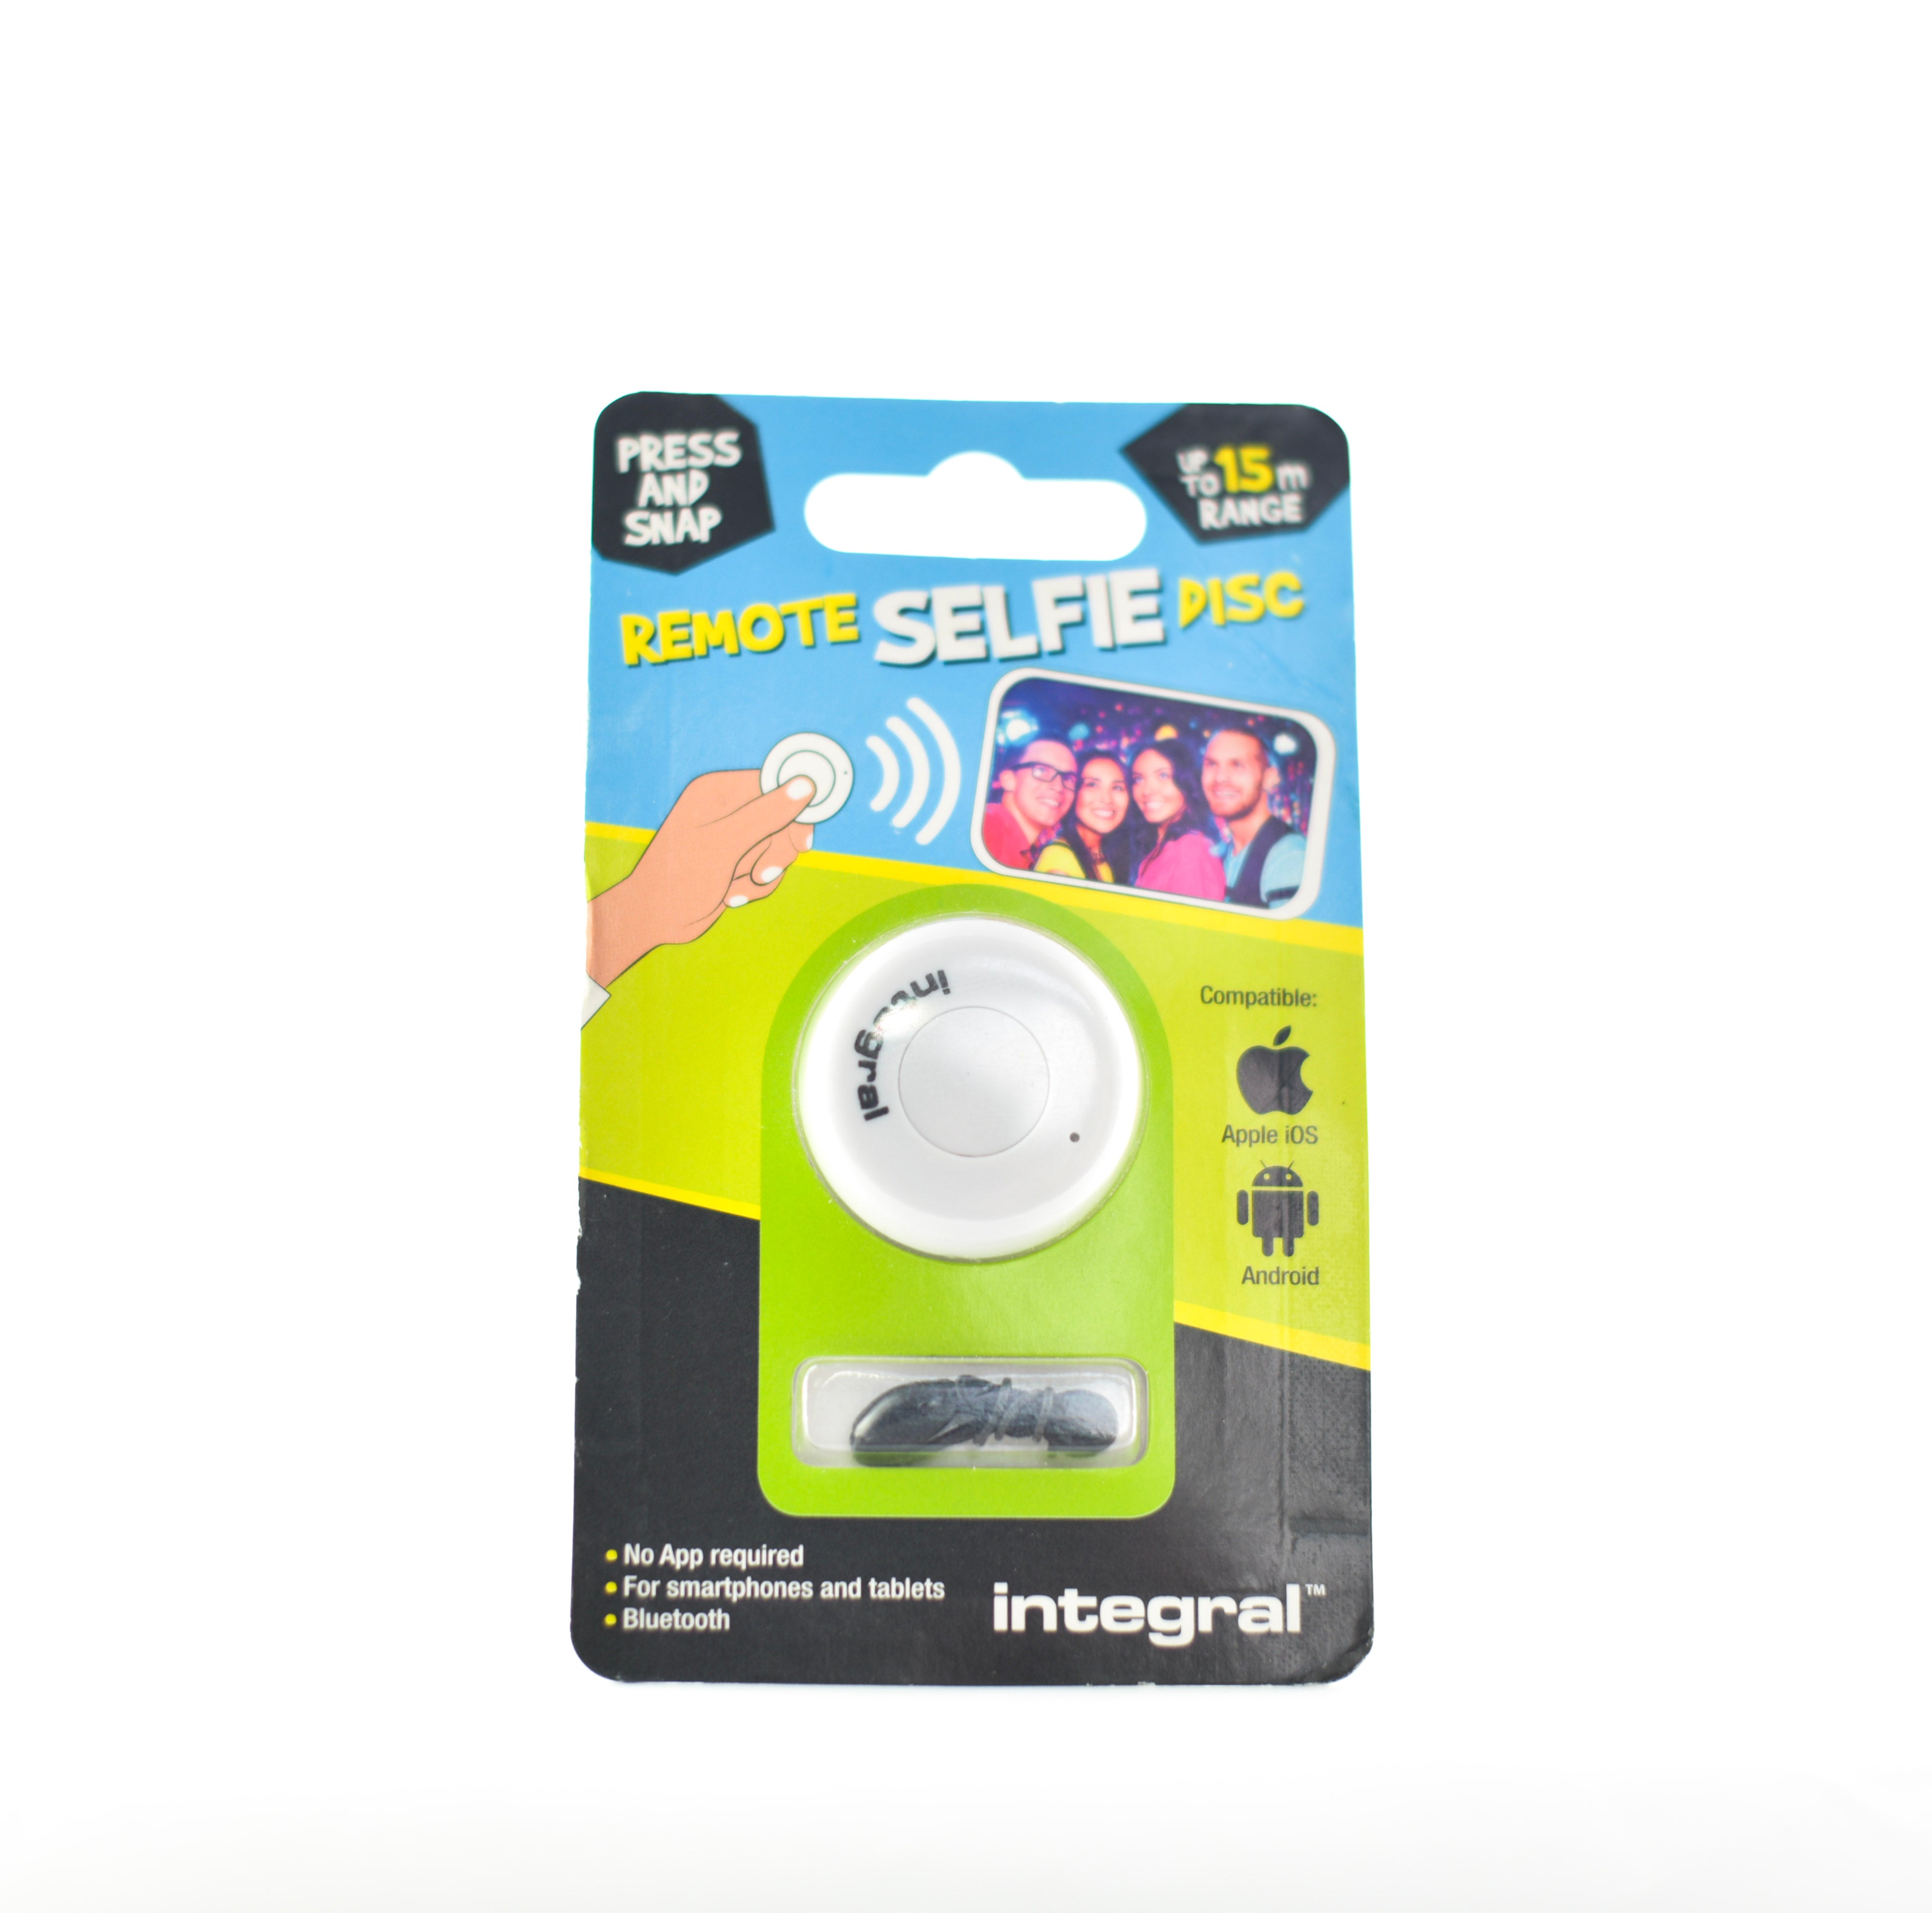 Integral Remote Selfie Disc